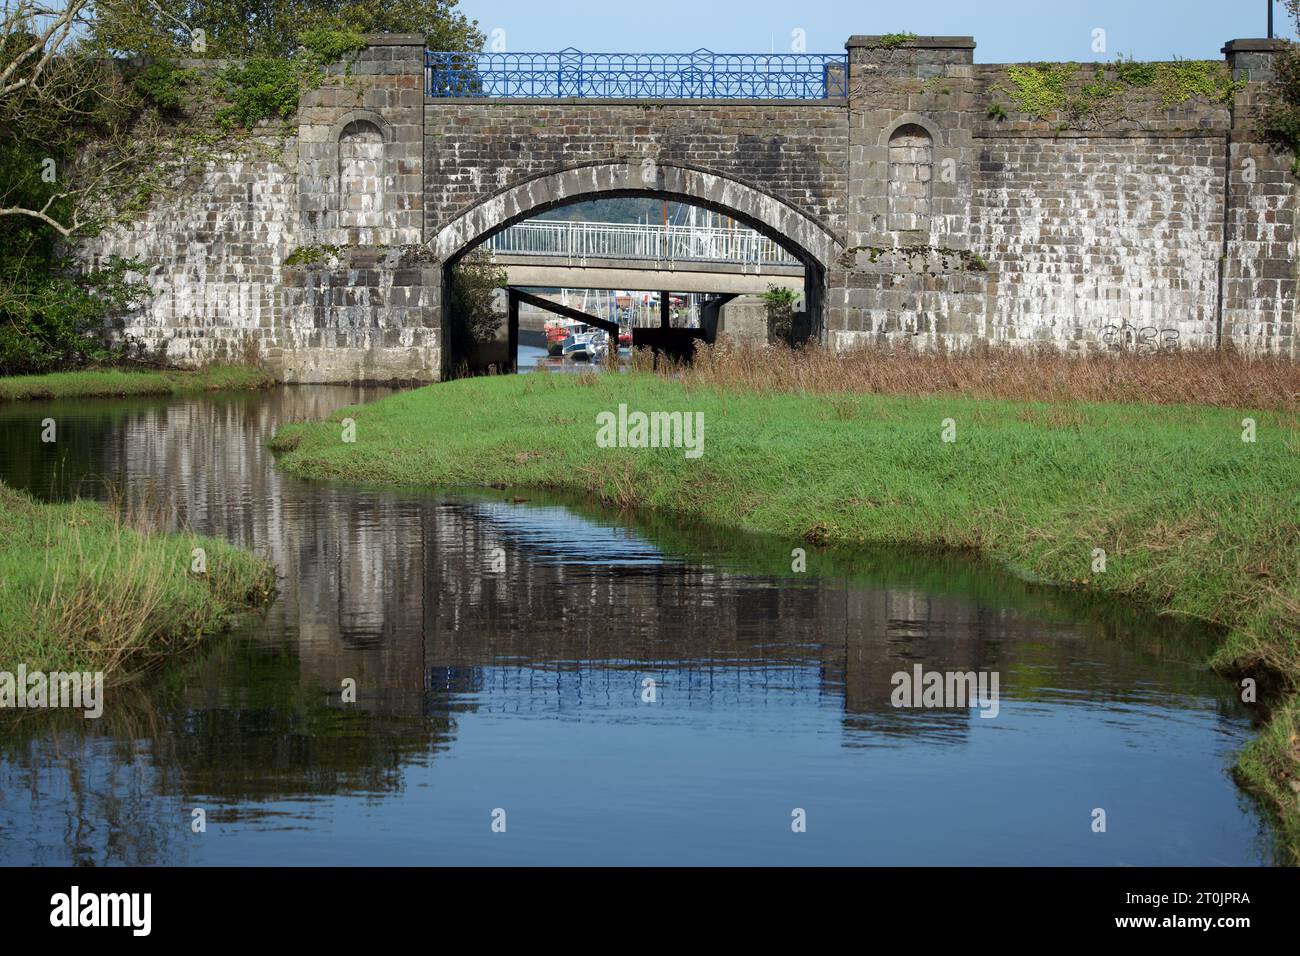 Porth Penrhyn Bridge is in Bangor or Penrhyn Docks (Porth Penrhyn) in North Wales. It spans the River Cegin and was built in 1820. Stock Photo